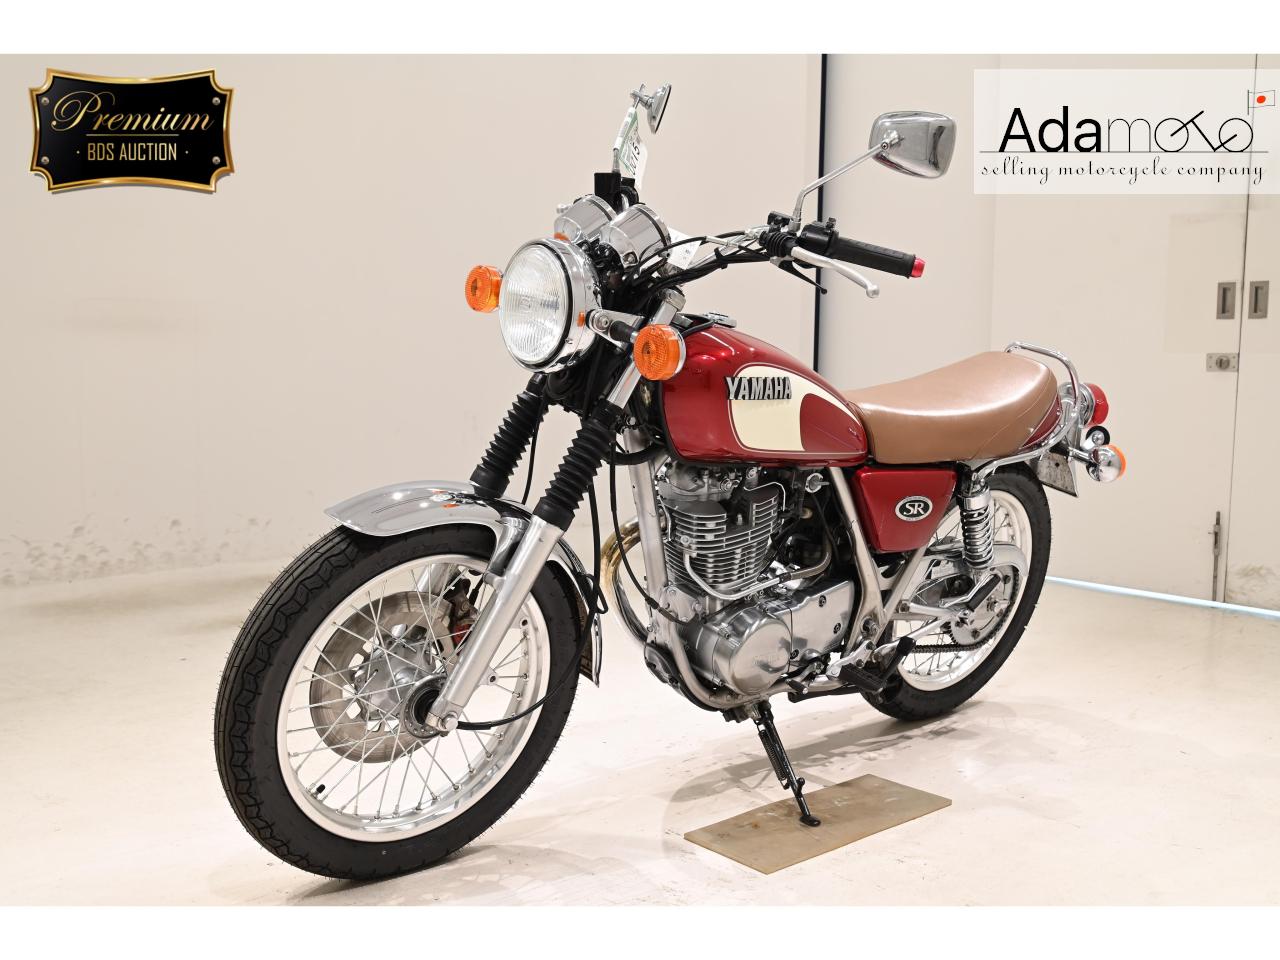 Yamaha SR400 3 - Adamoto - Motorcycles from Japan